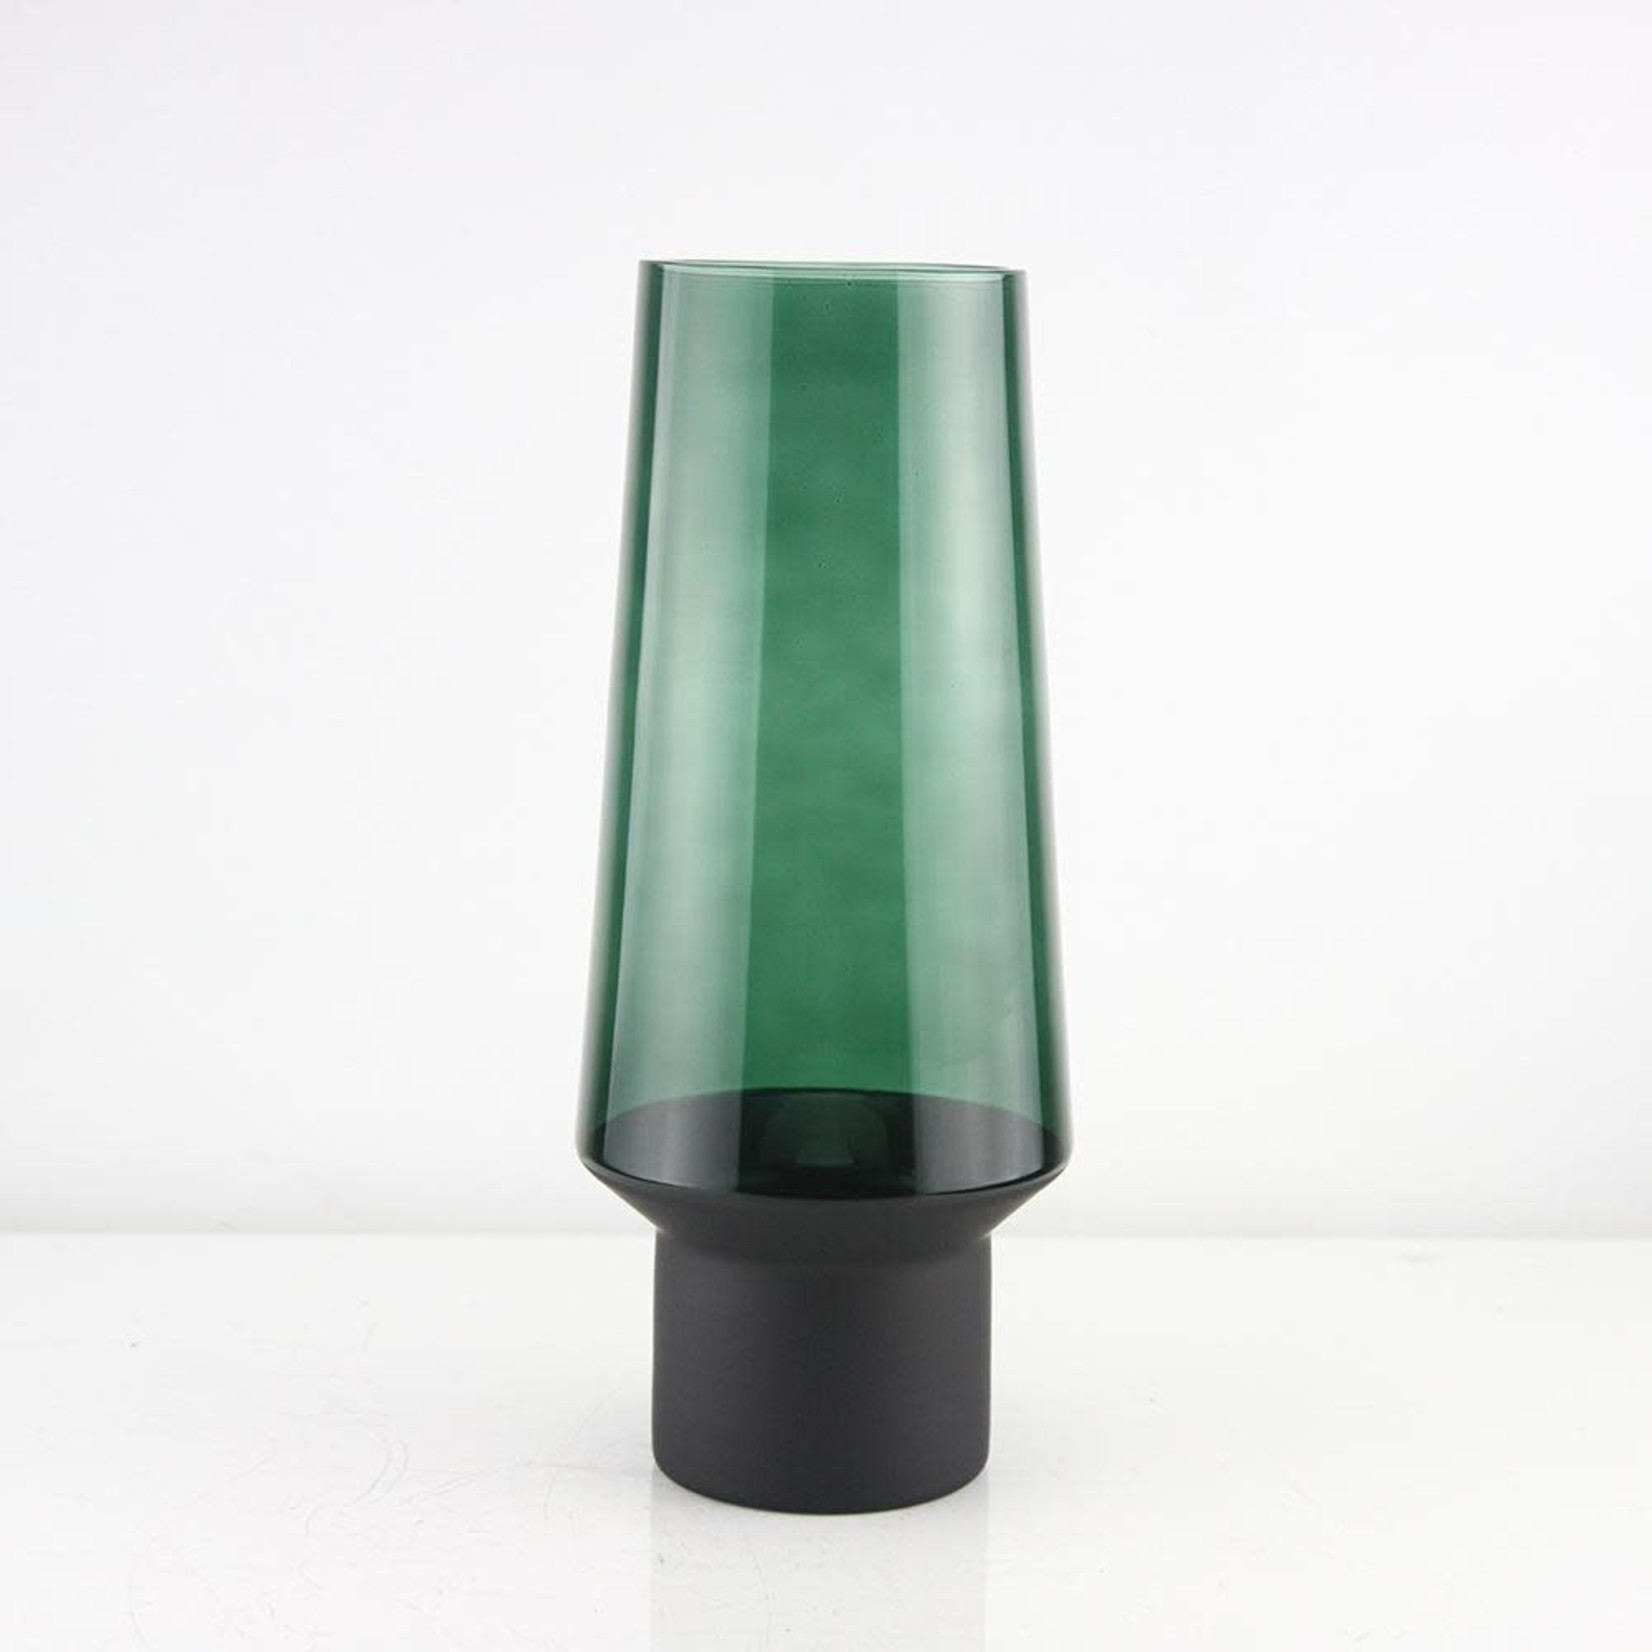 12.75”H X 5.5” X 4” OPEN Green Smoke Vases